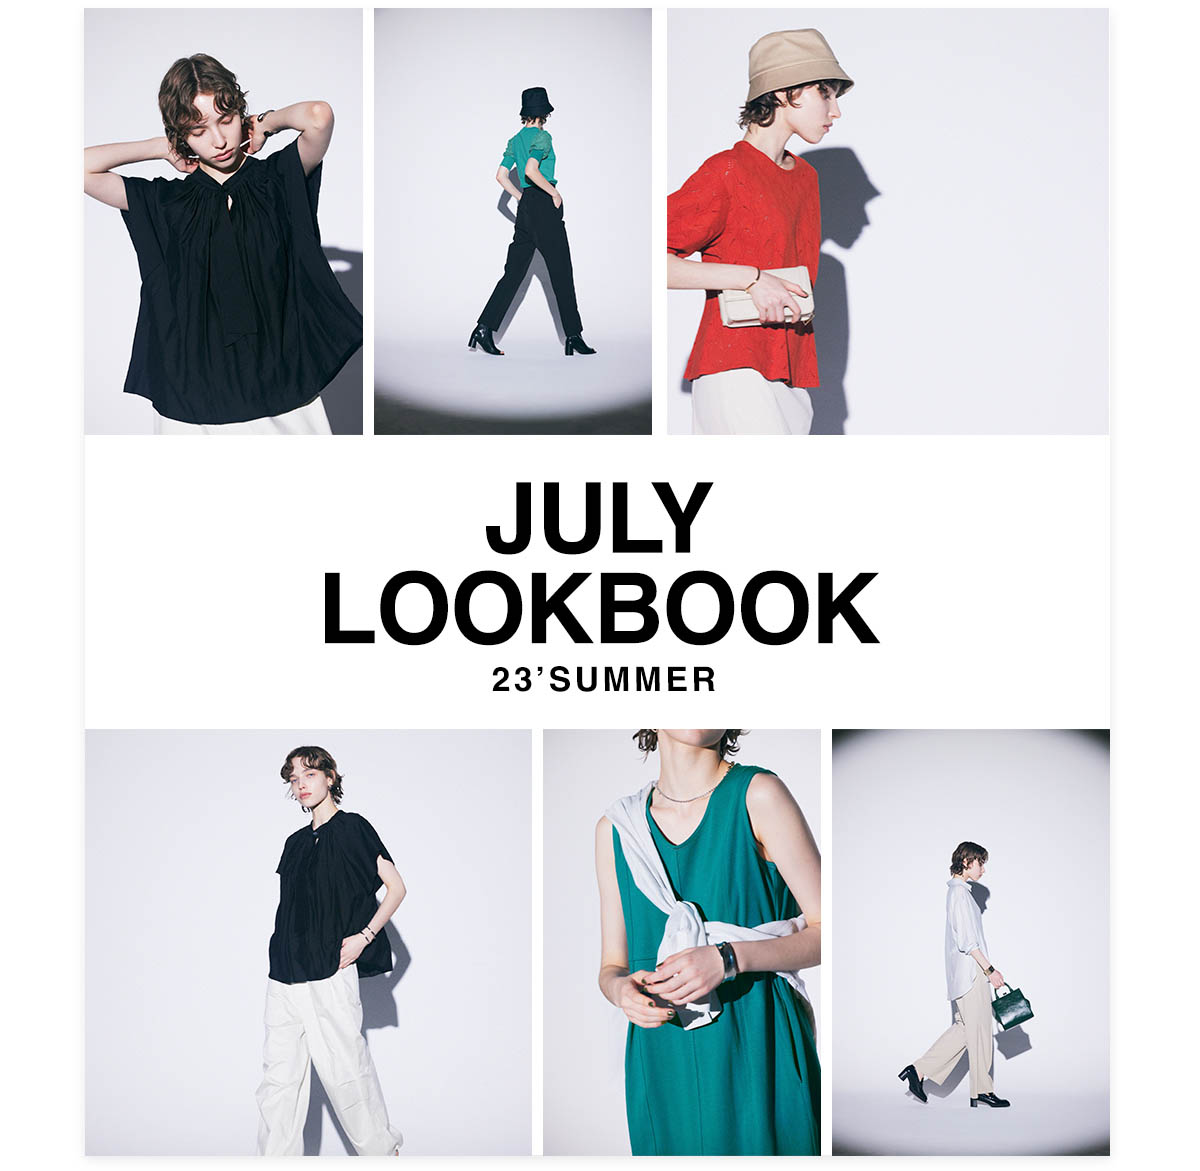 JULY LOOK BOOK 23’SUMMER for WOMEN